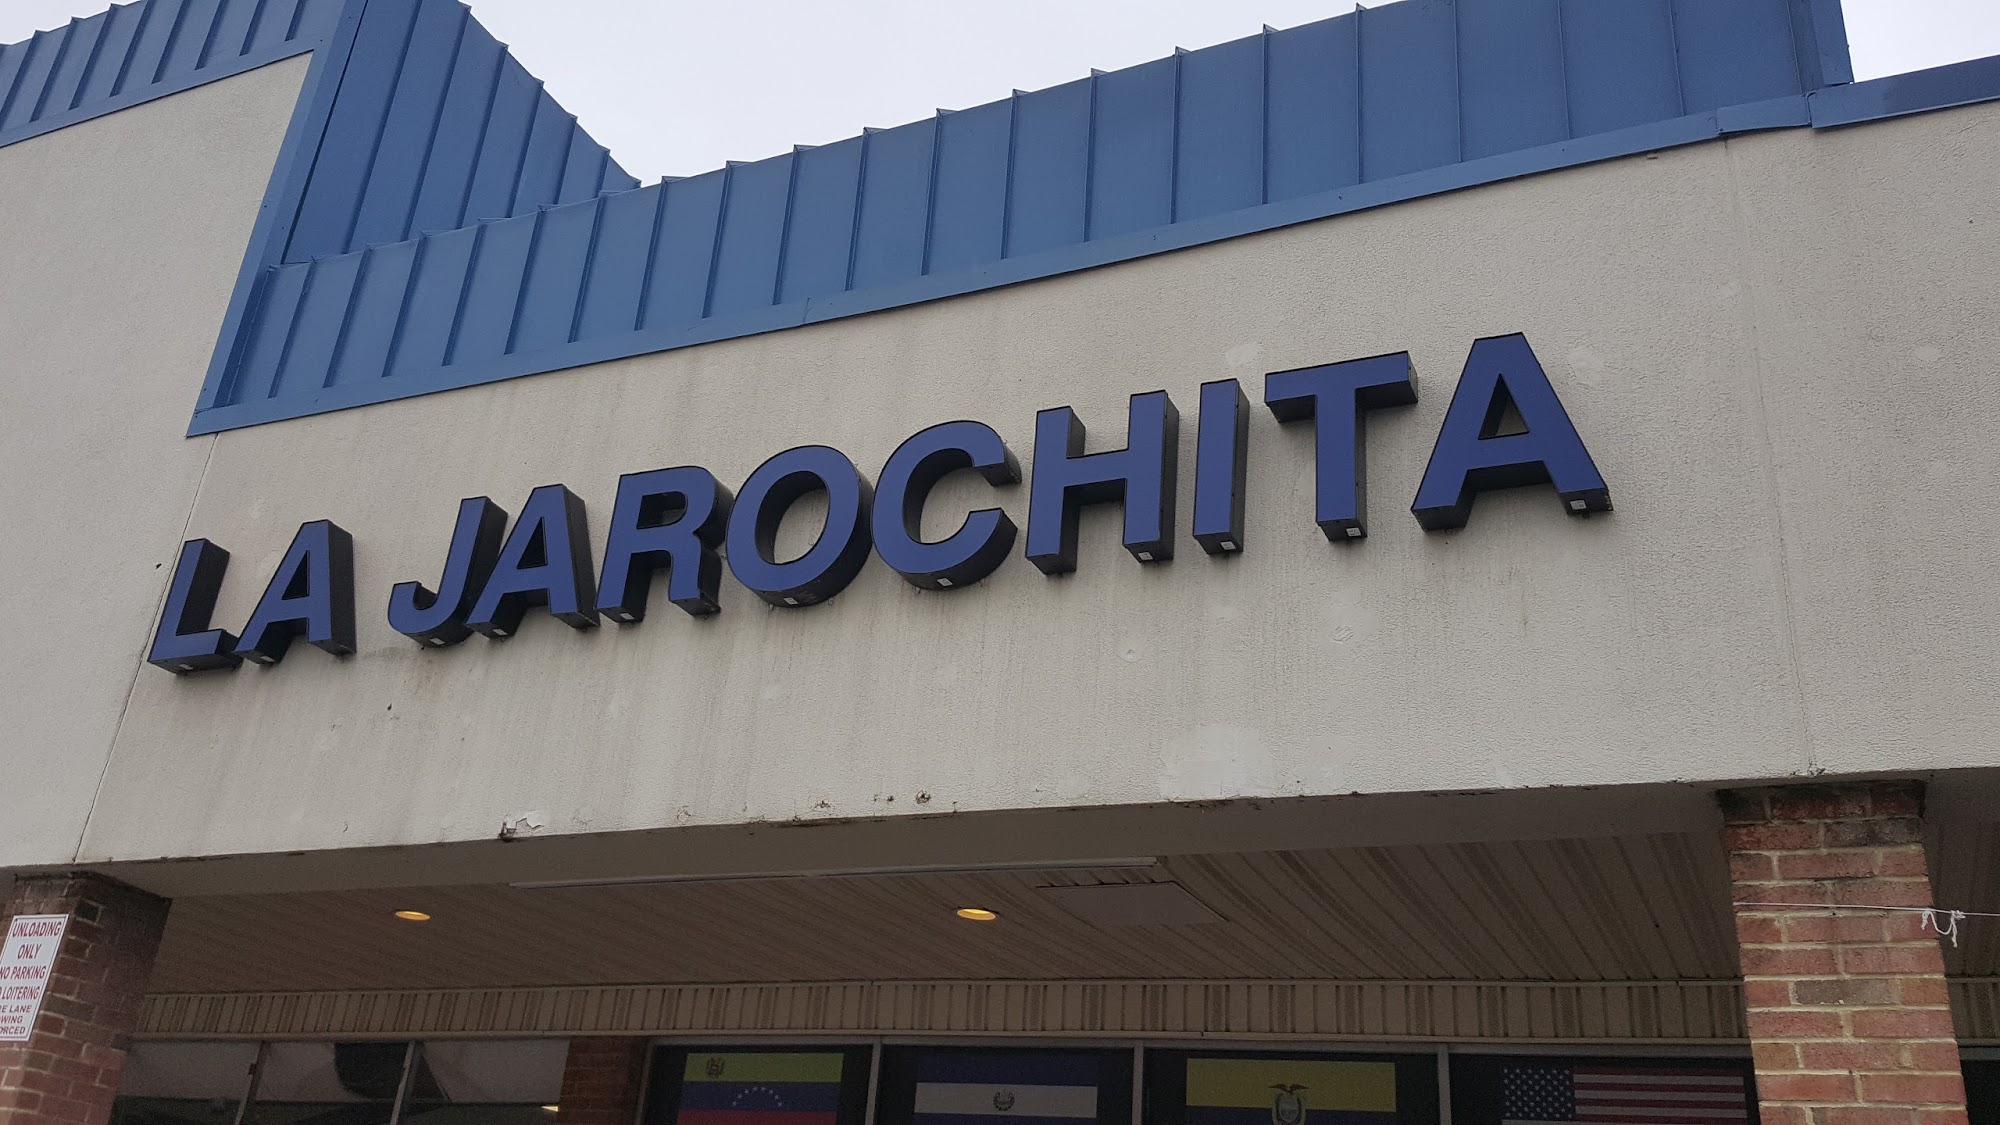 La Jarochita Restaurant